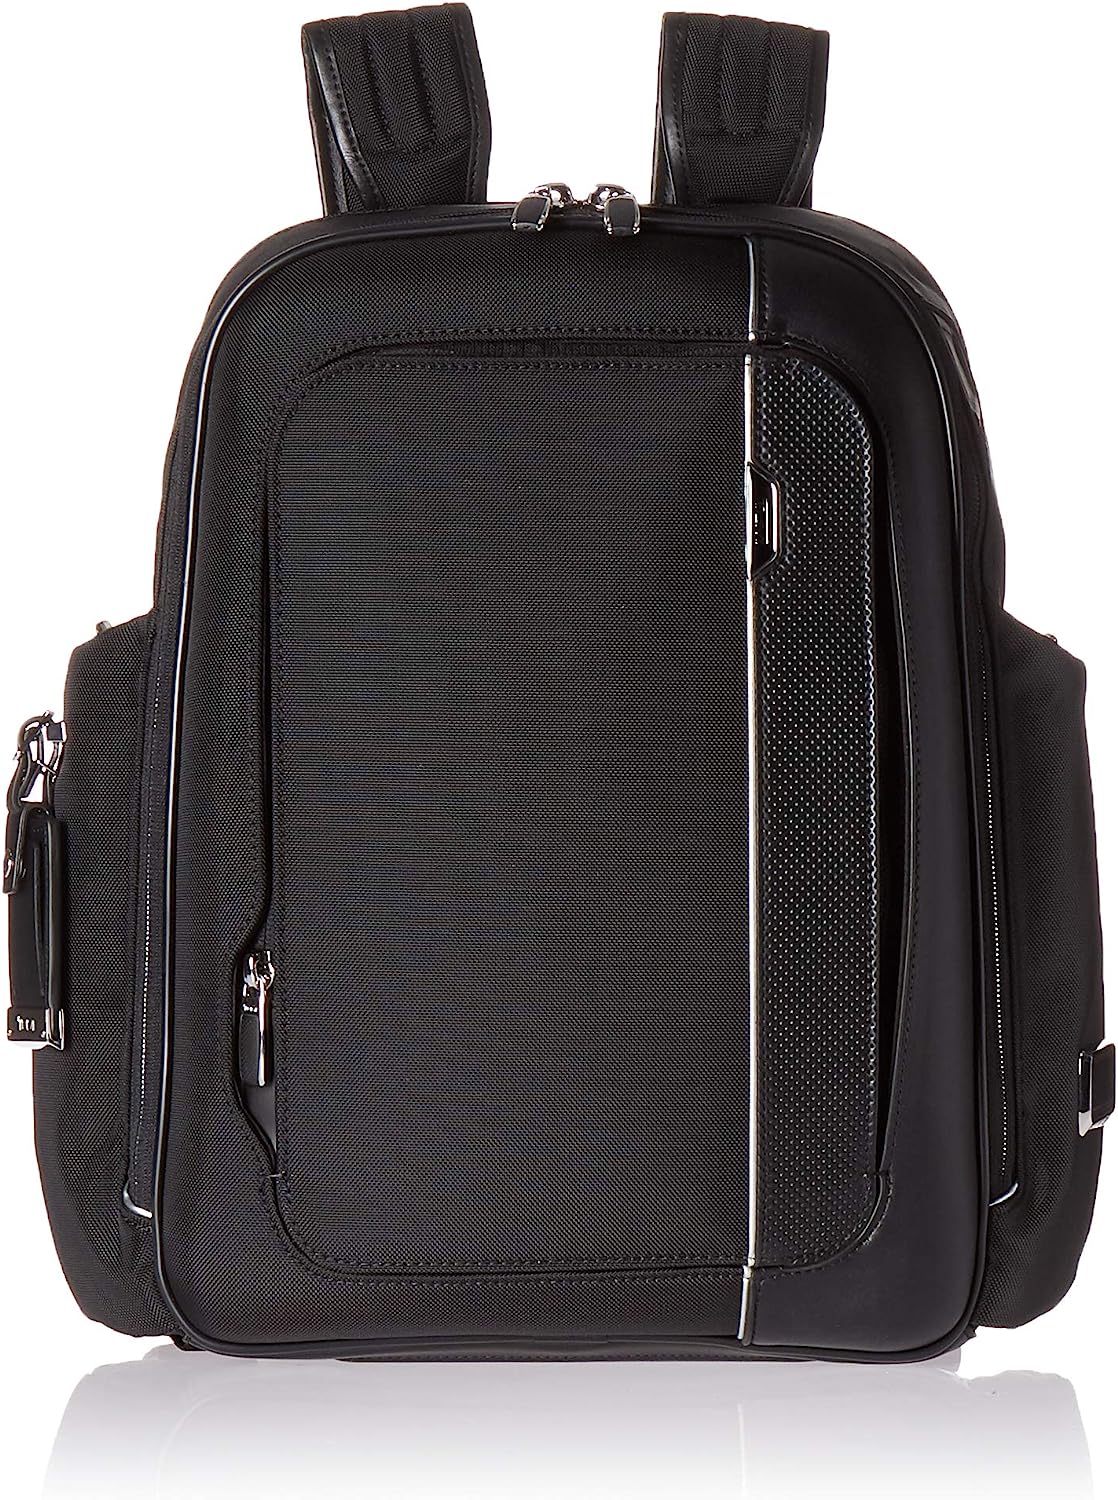 TUMI - Arrivé Larson Laptop Backpack - 14 Inch Computer Bag for Men and Women - Black